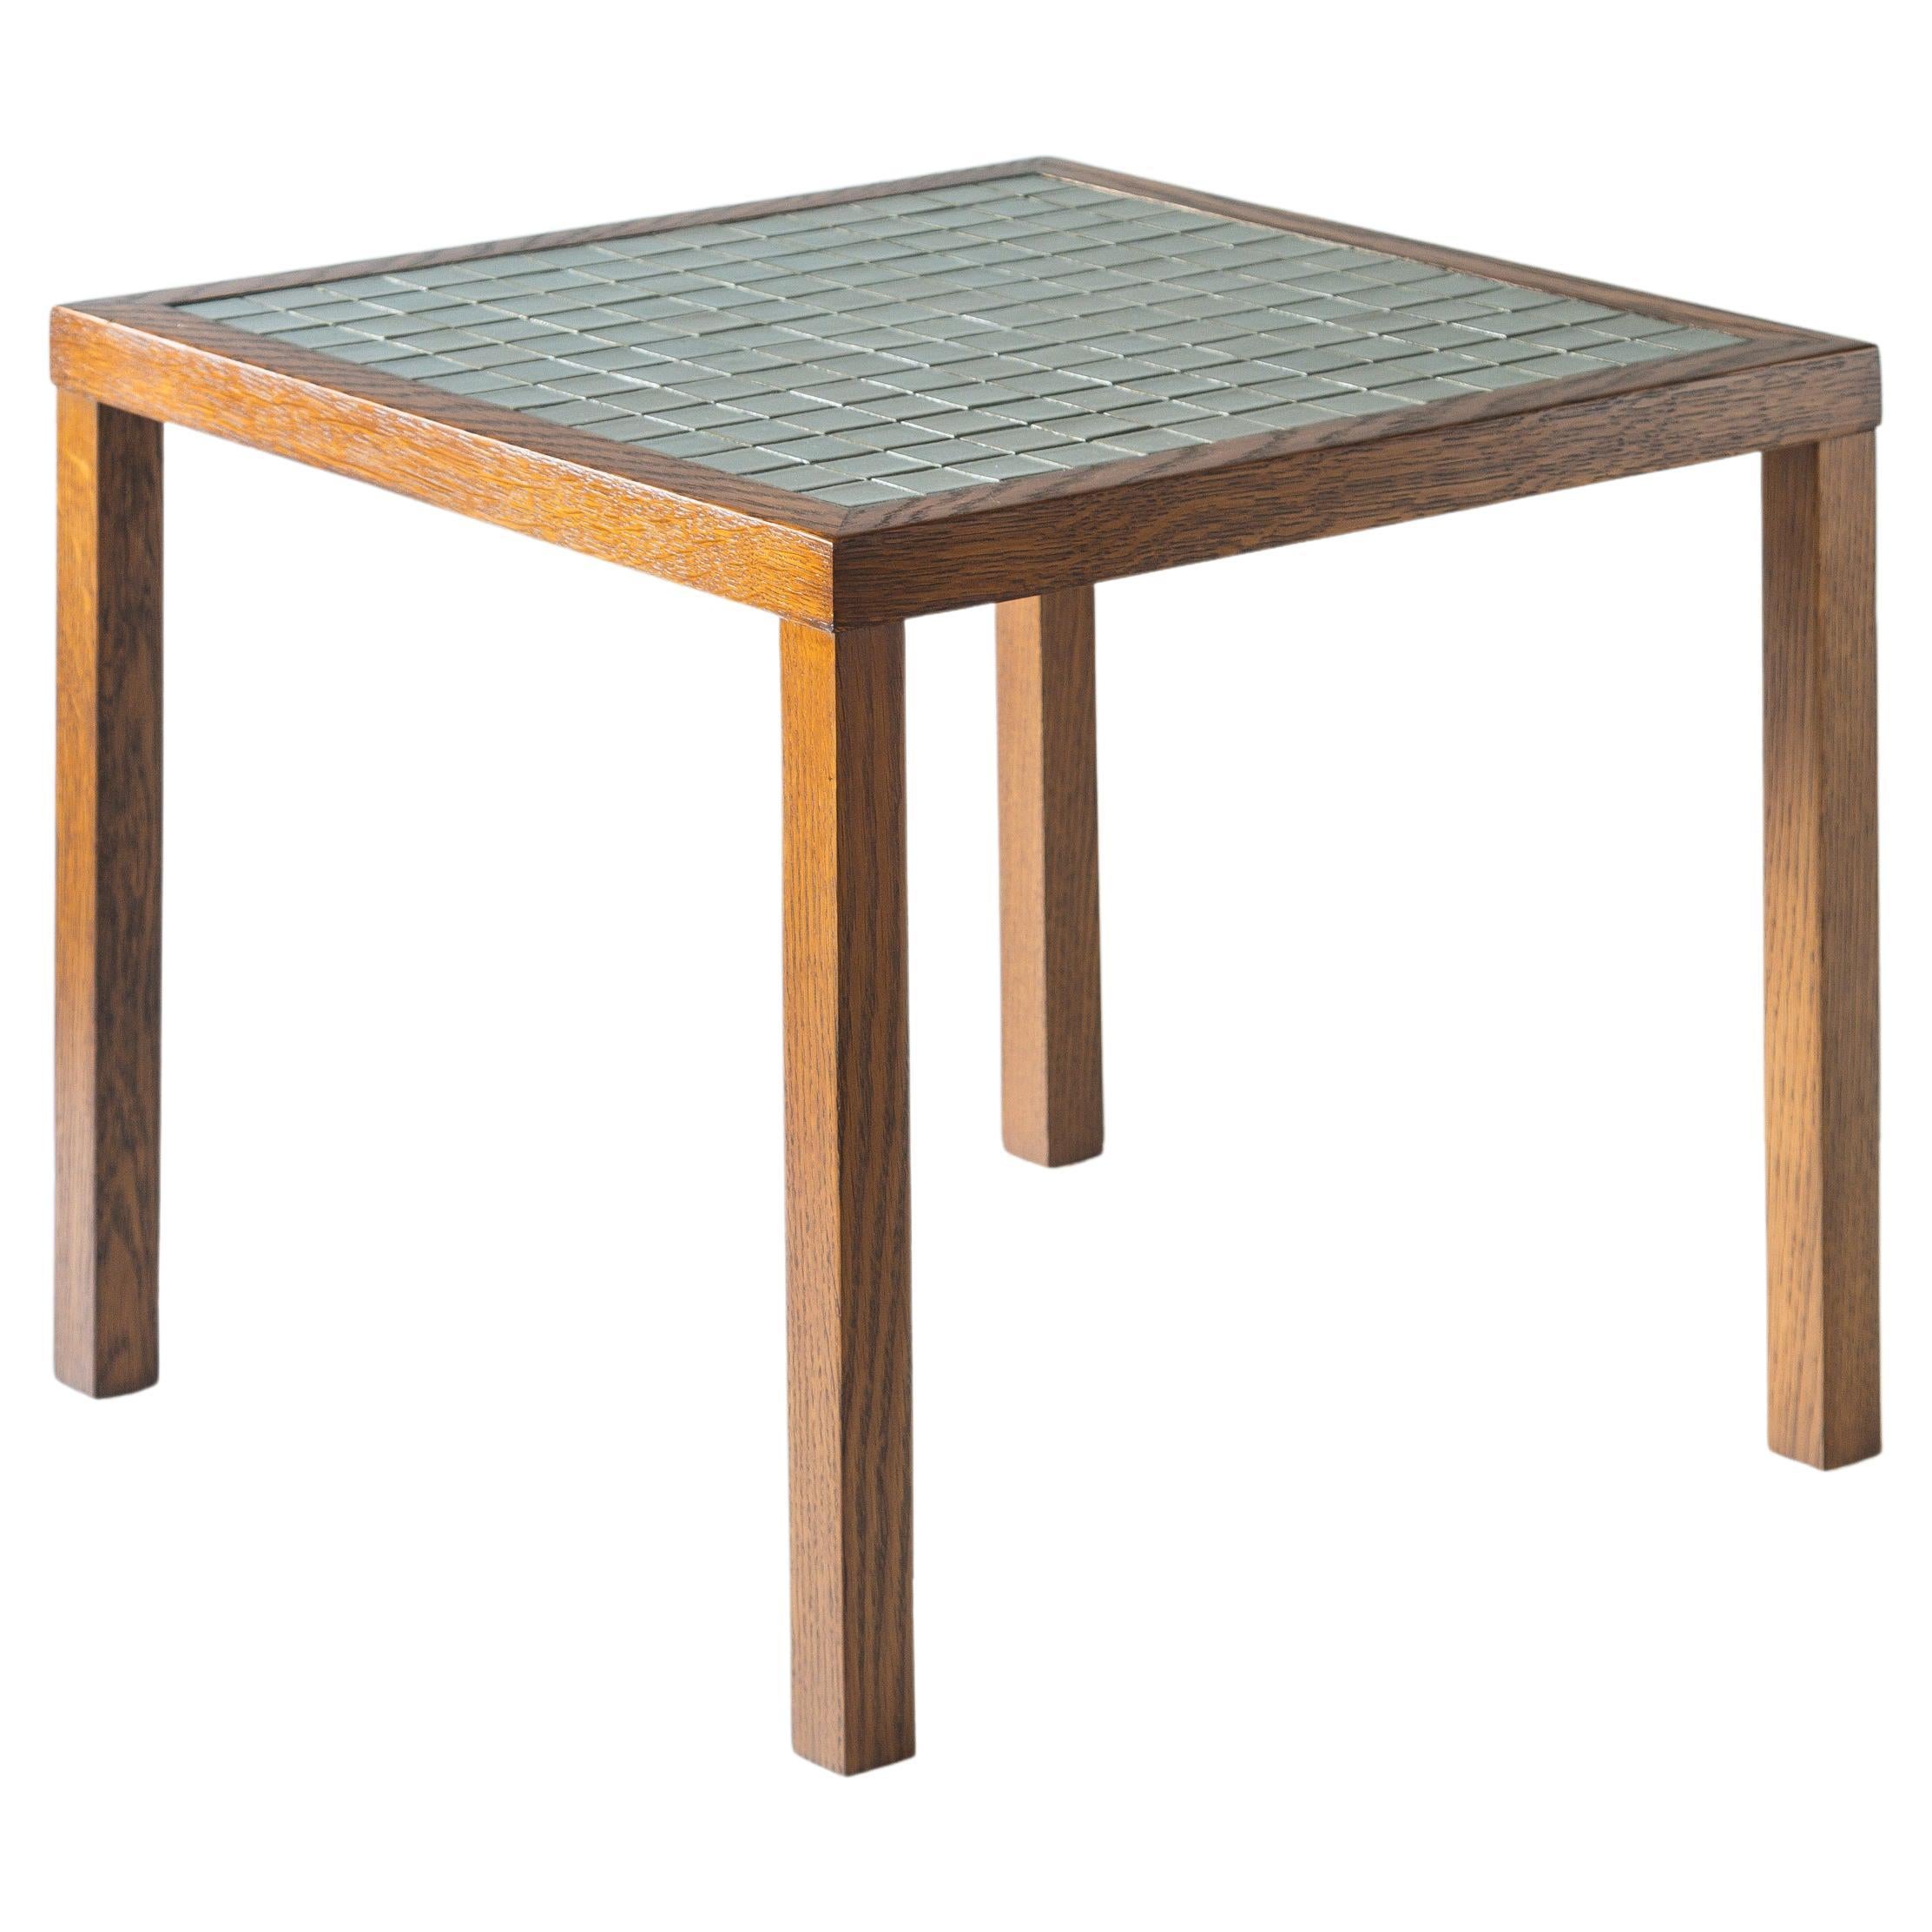 Martz / Marshall Studios Tile Topped Dark Oak End Table / Plant Stand